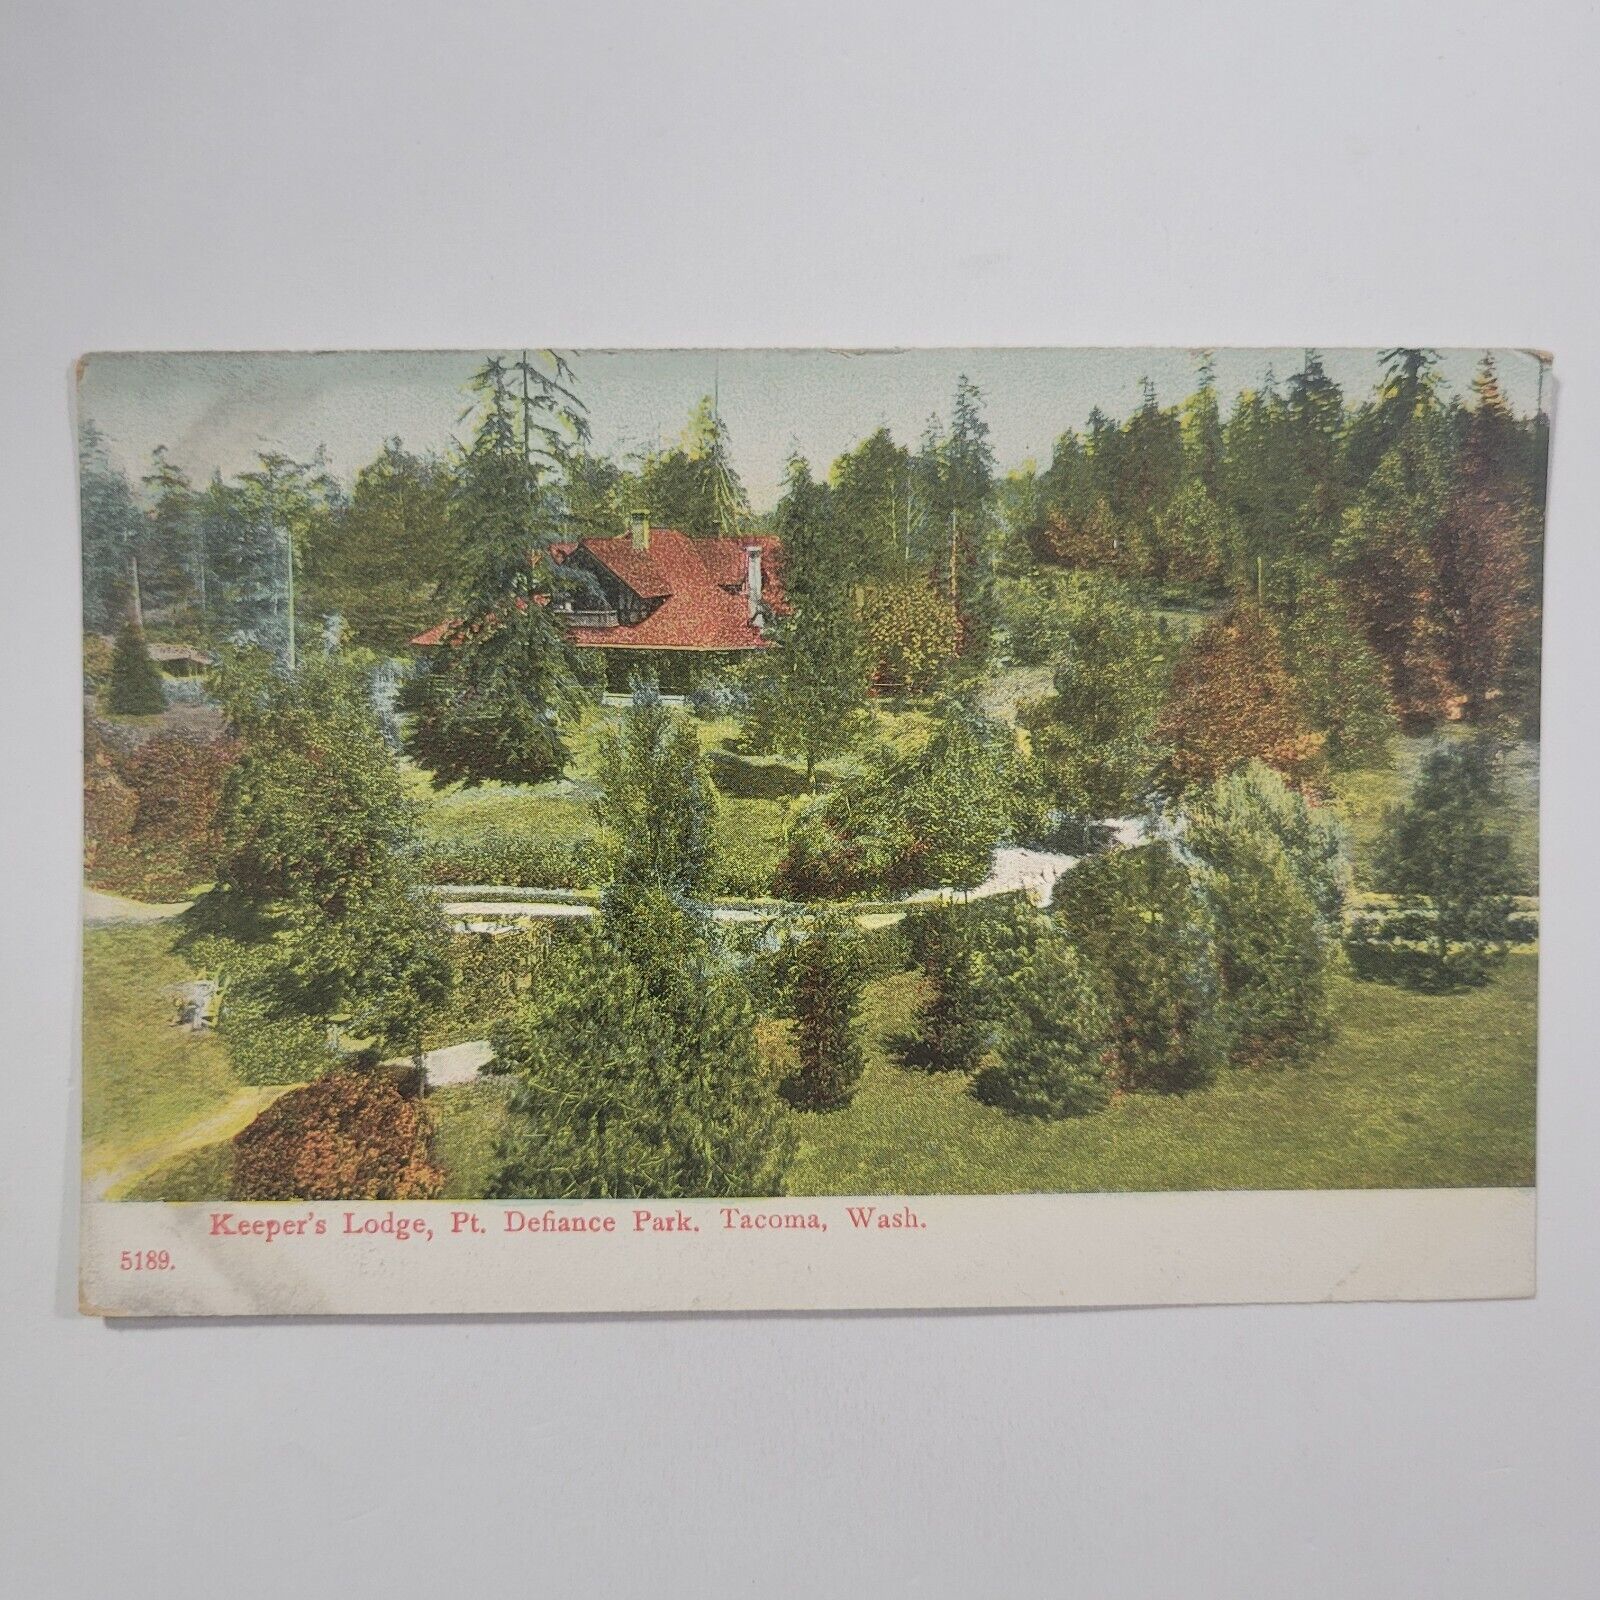 Keeper's Lodge Point Defiance Tacoma Washington Vintage Lithograph Postcard